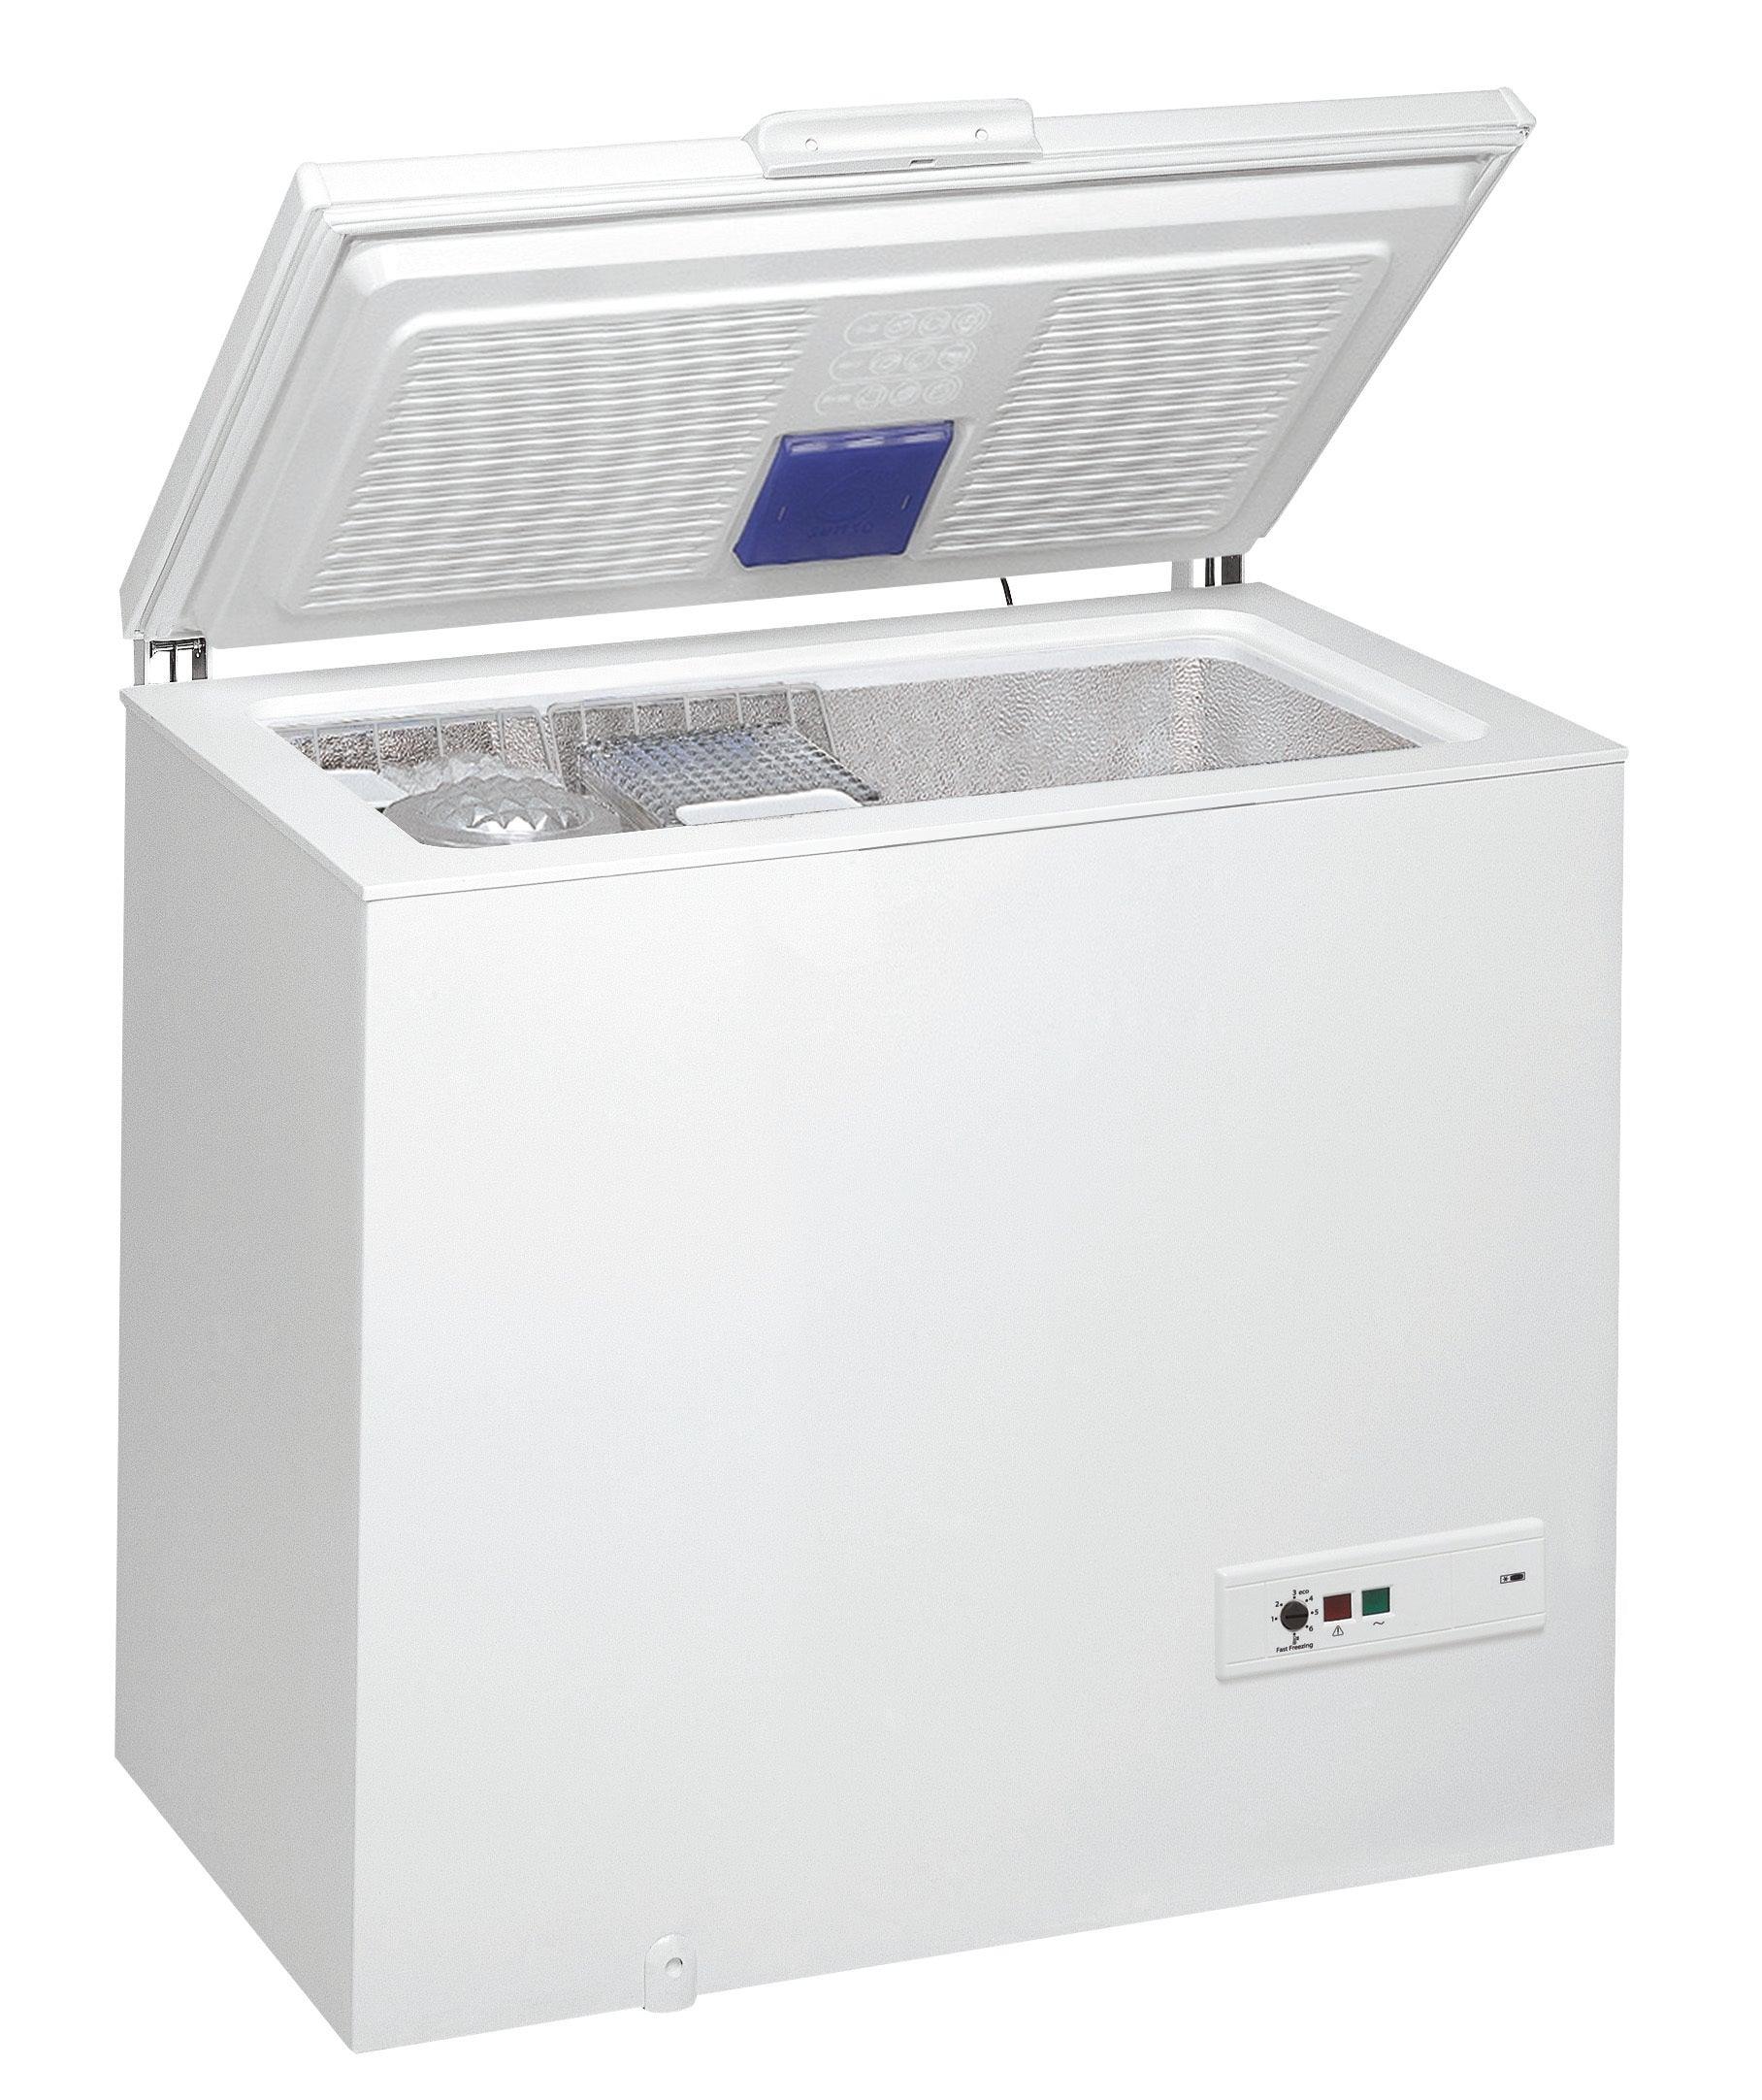 Whirlpool freestanding chest freezer | WHM3111.1 - Peter Murphy Lighting & Electrical Ltd